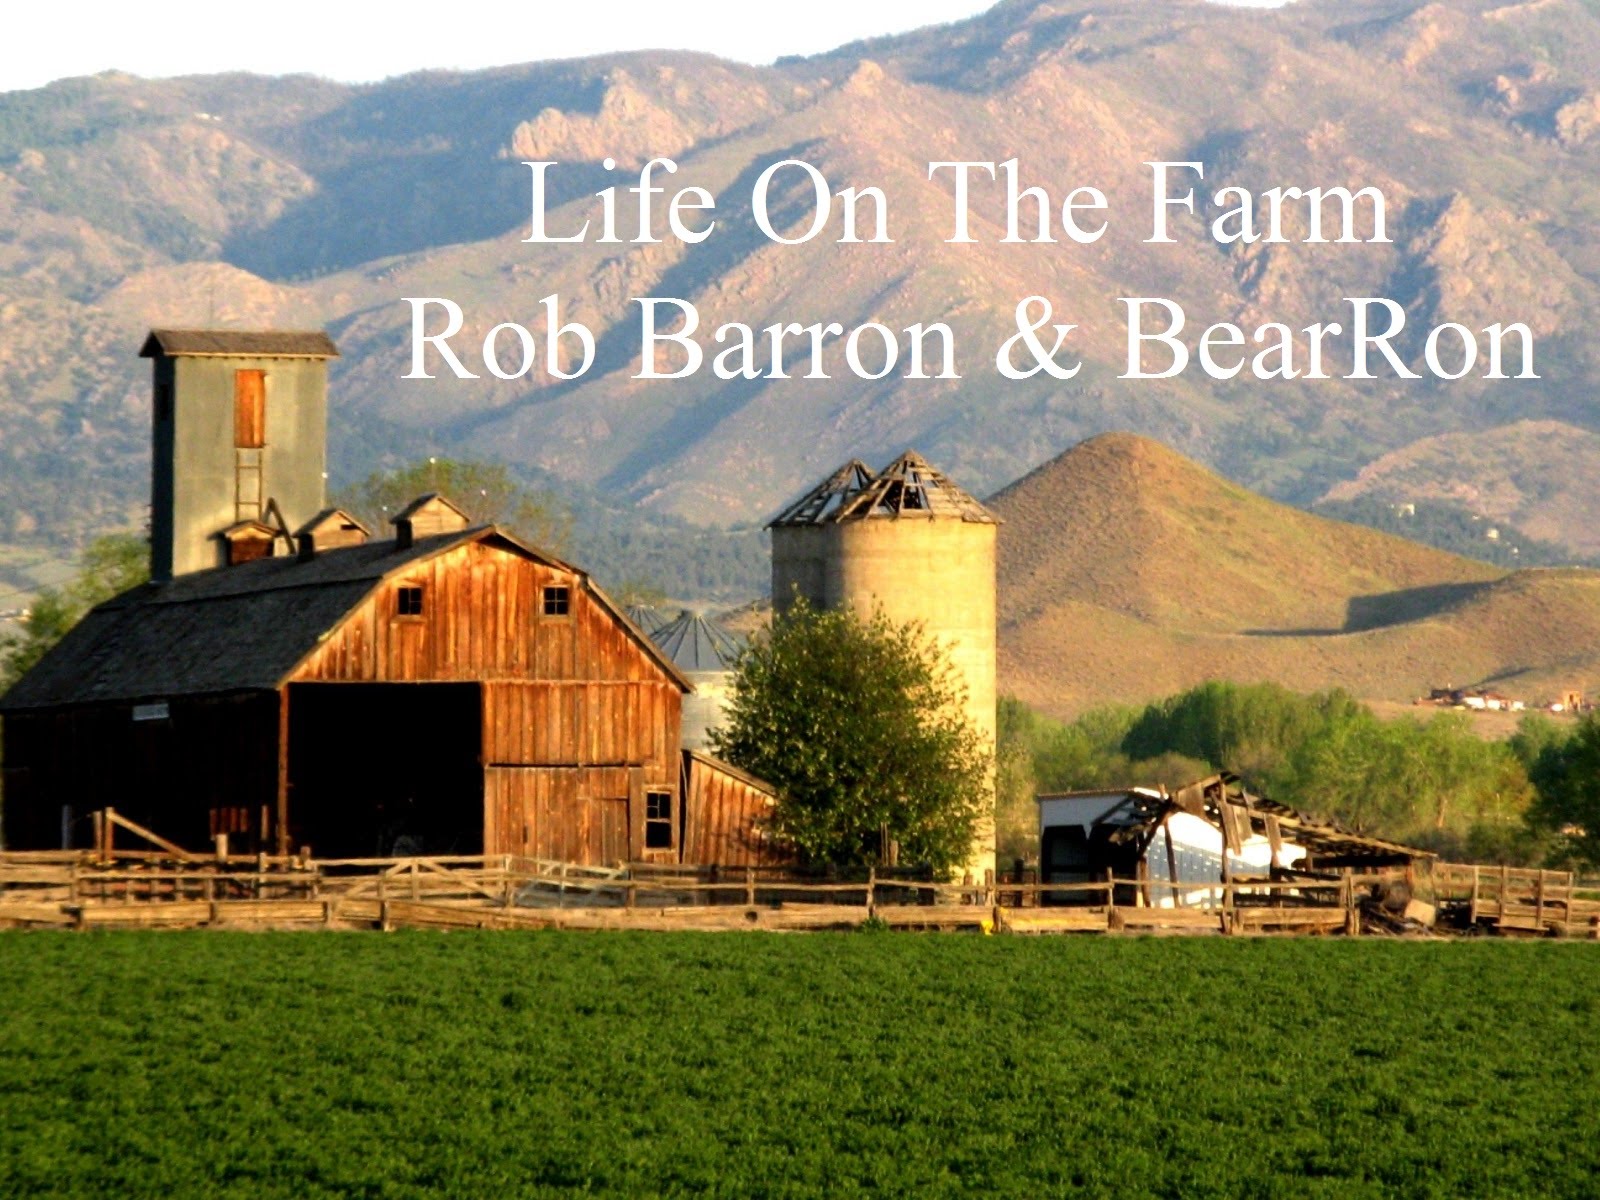 Life On The Farm (Original Song) - Farm Life - PT 8 - YouTube